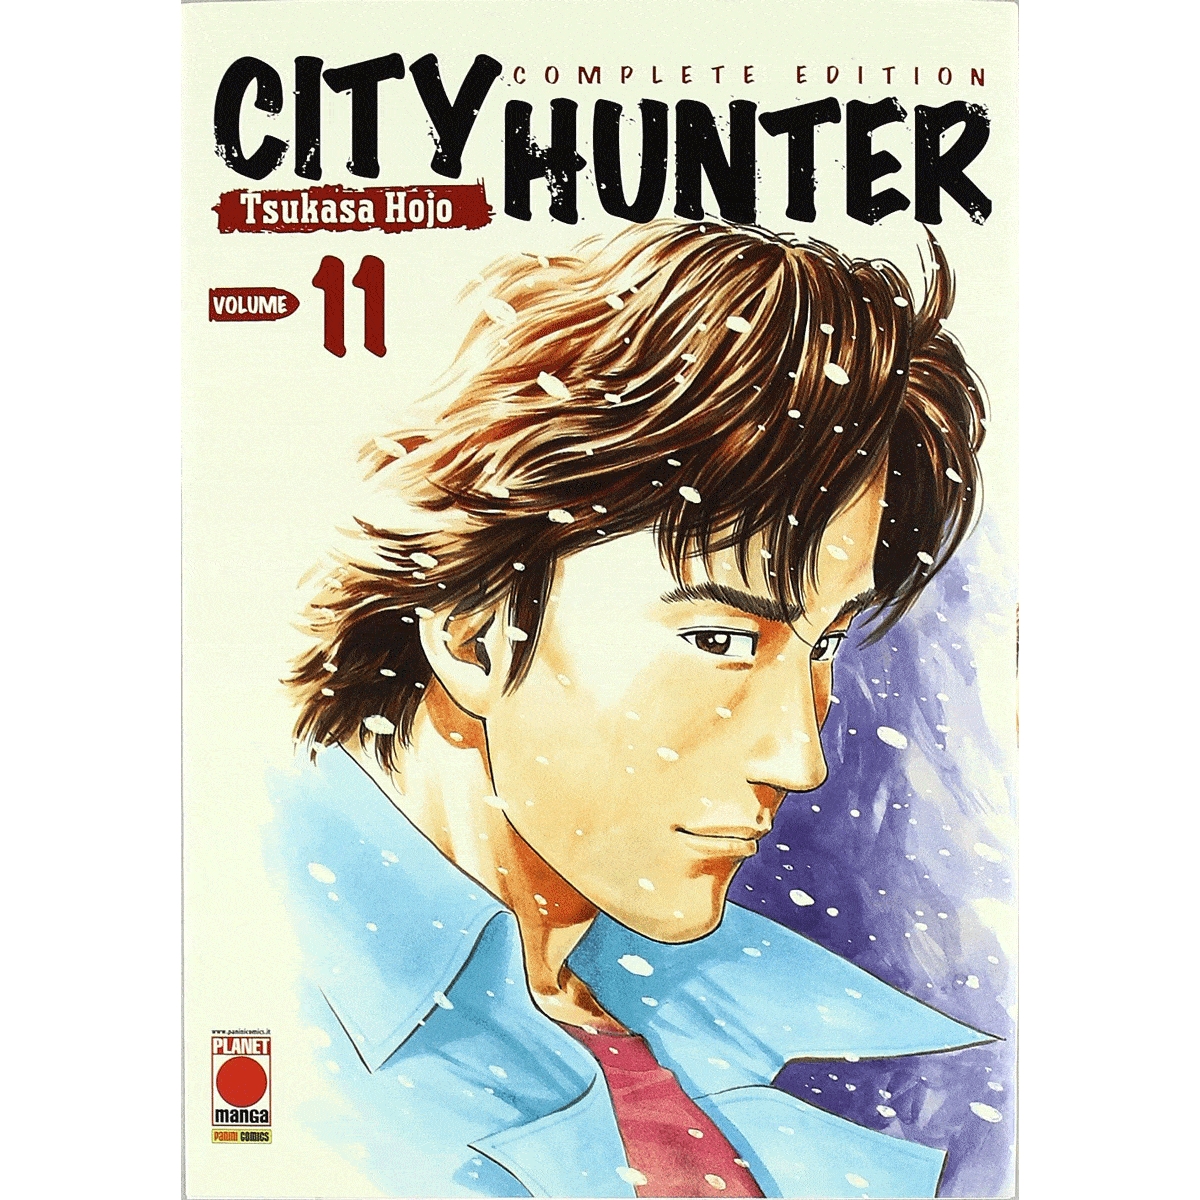 City Hunter 11